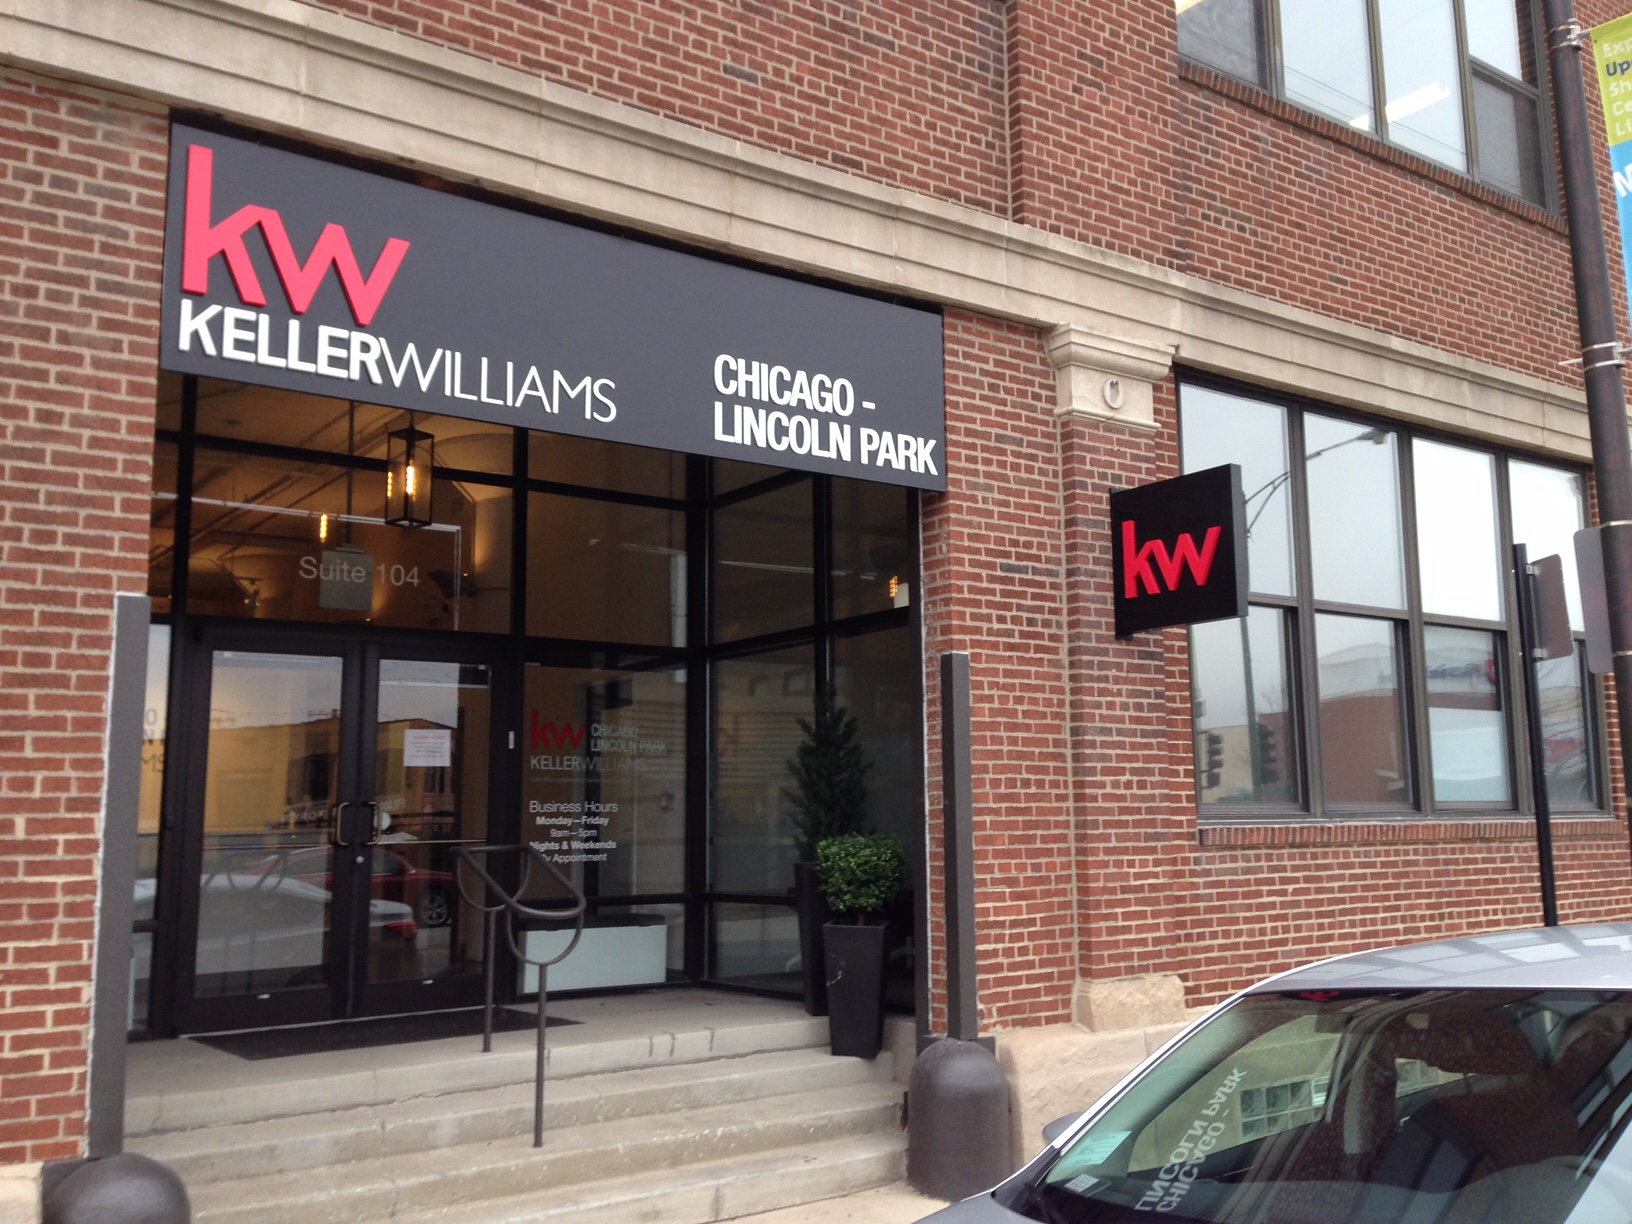 Keller Williams exterior business signage